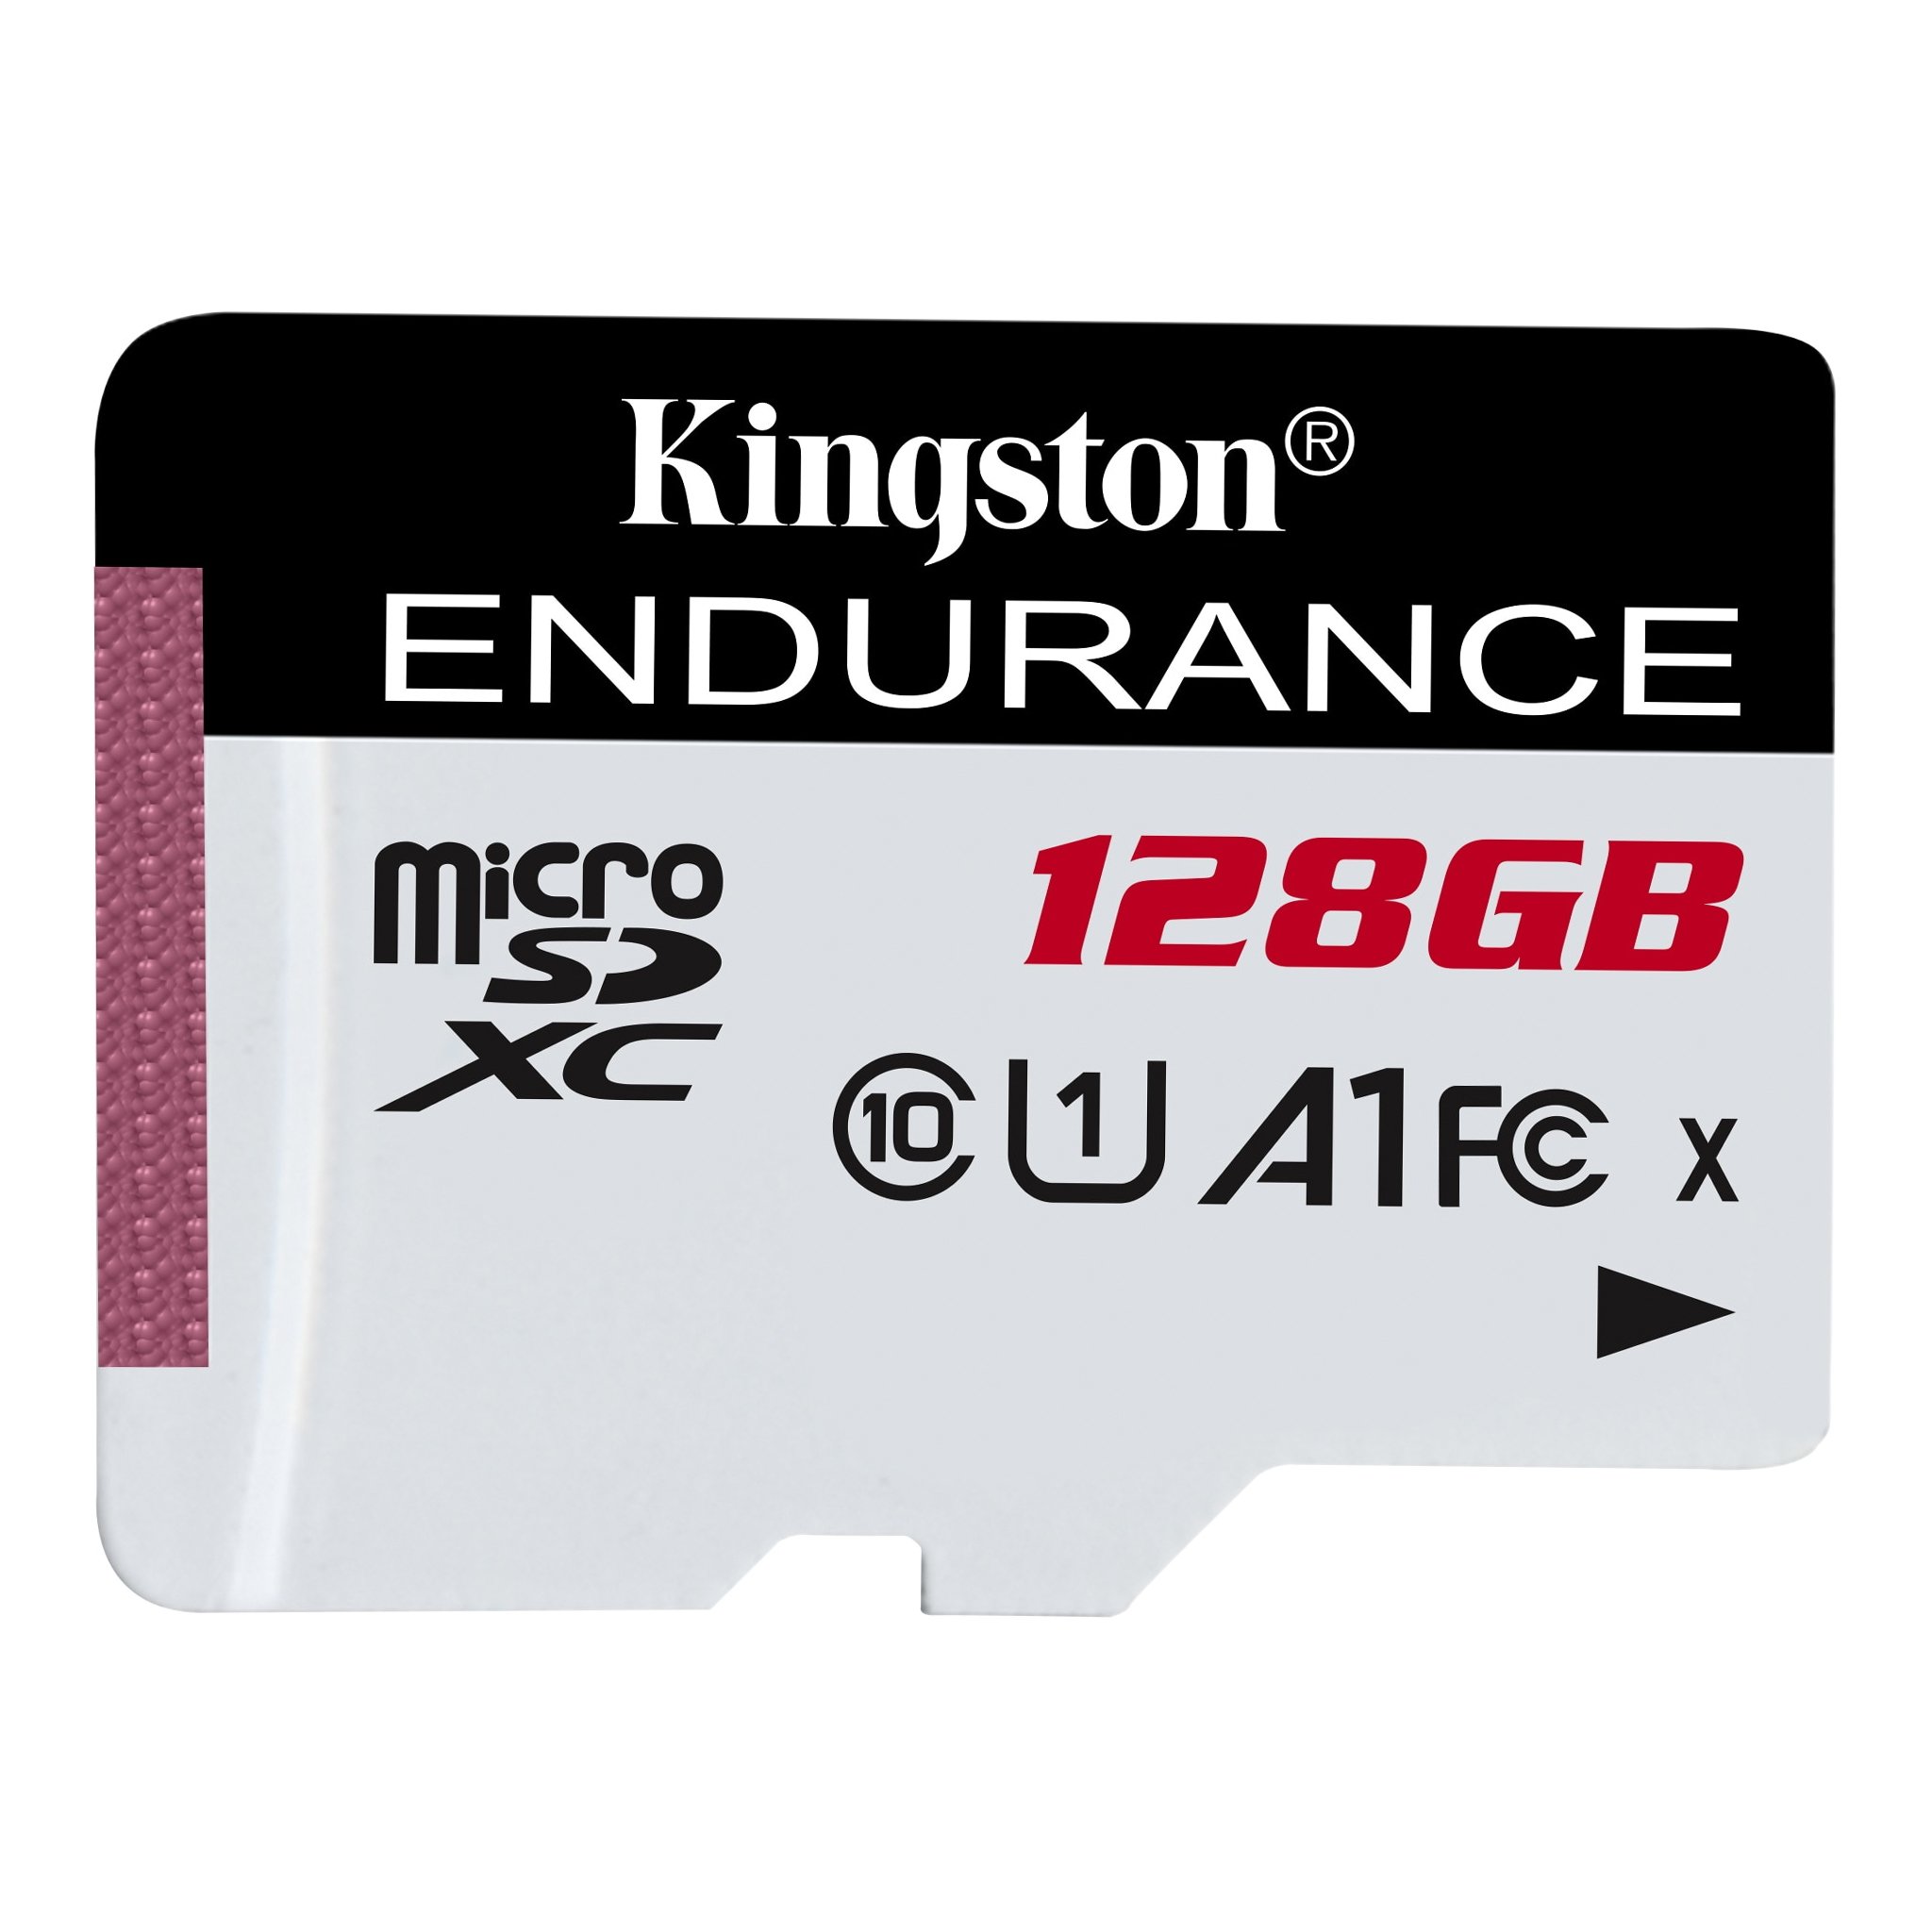 High Endurance microSD Card for security cams, dash cams, body cams -  Kingston Technology